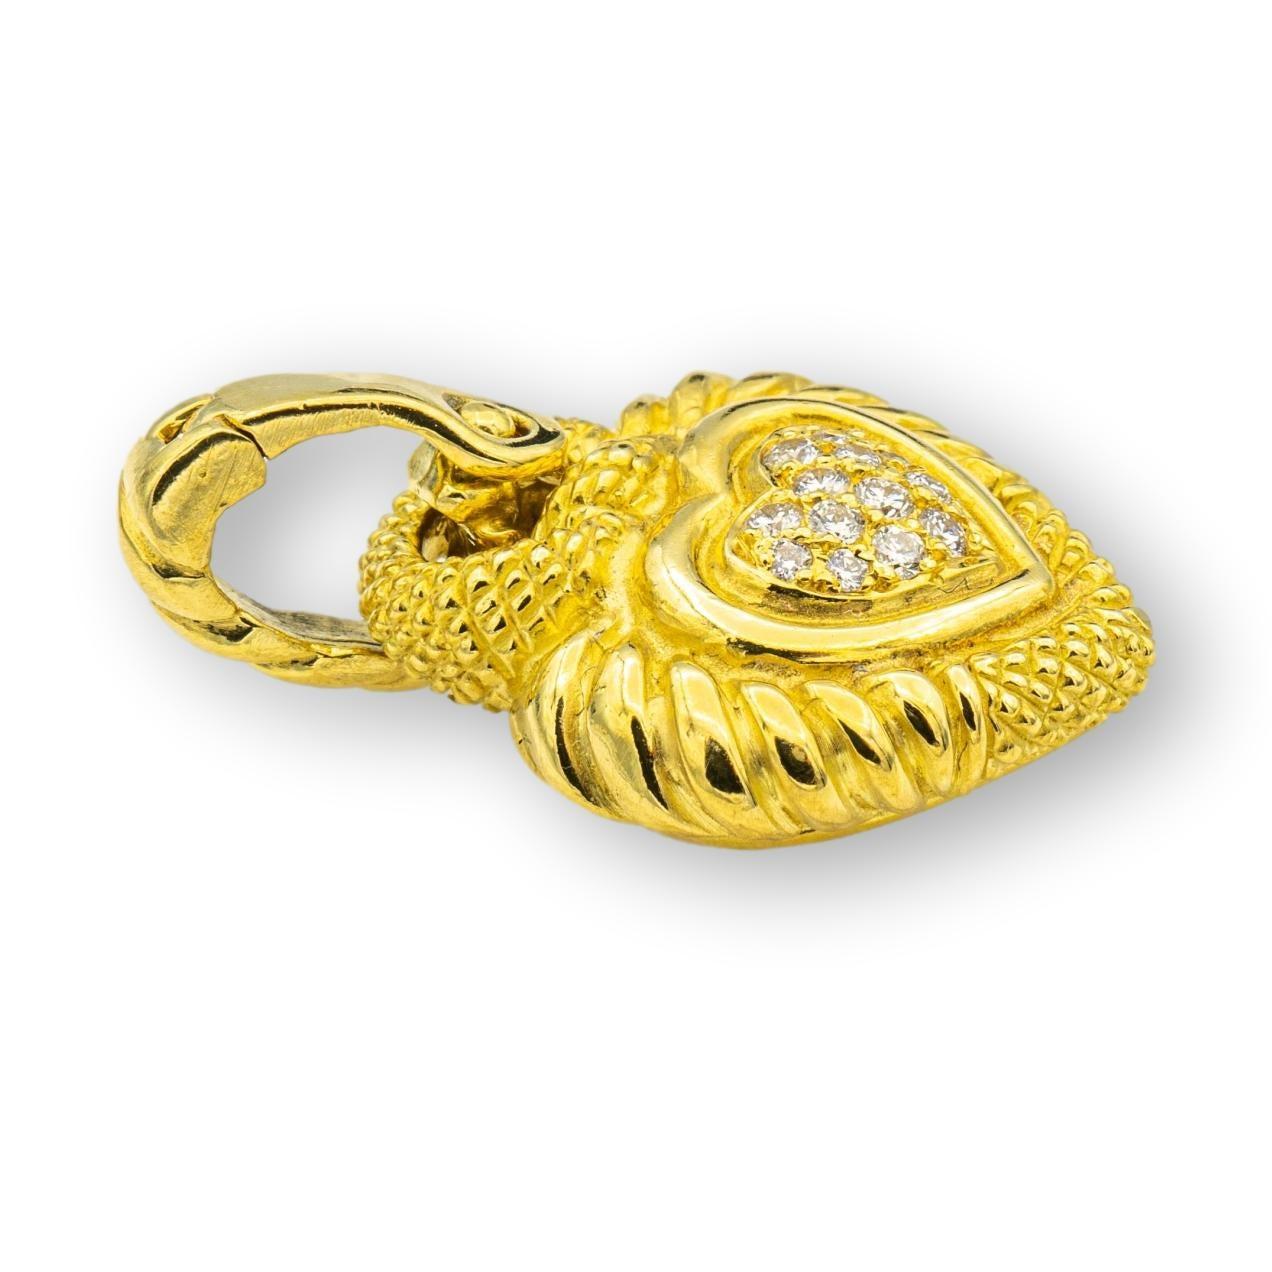 Contemporary Judith Ripka 18K Yellow Gold Heart Charm Enhancer Pendant with Pave Diamonds